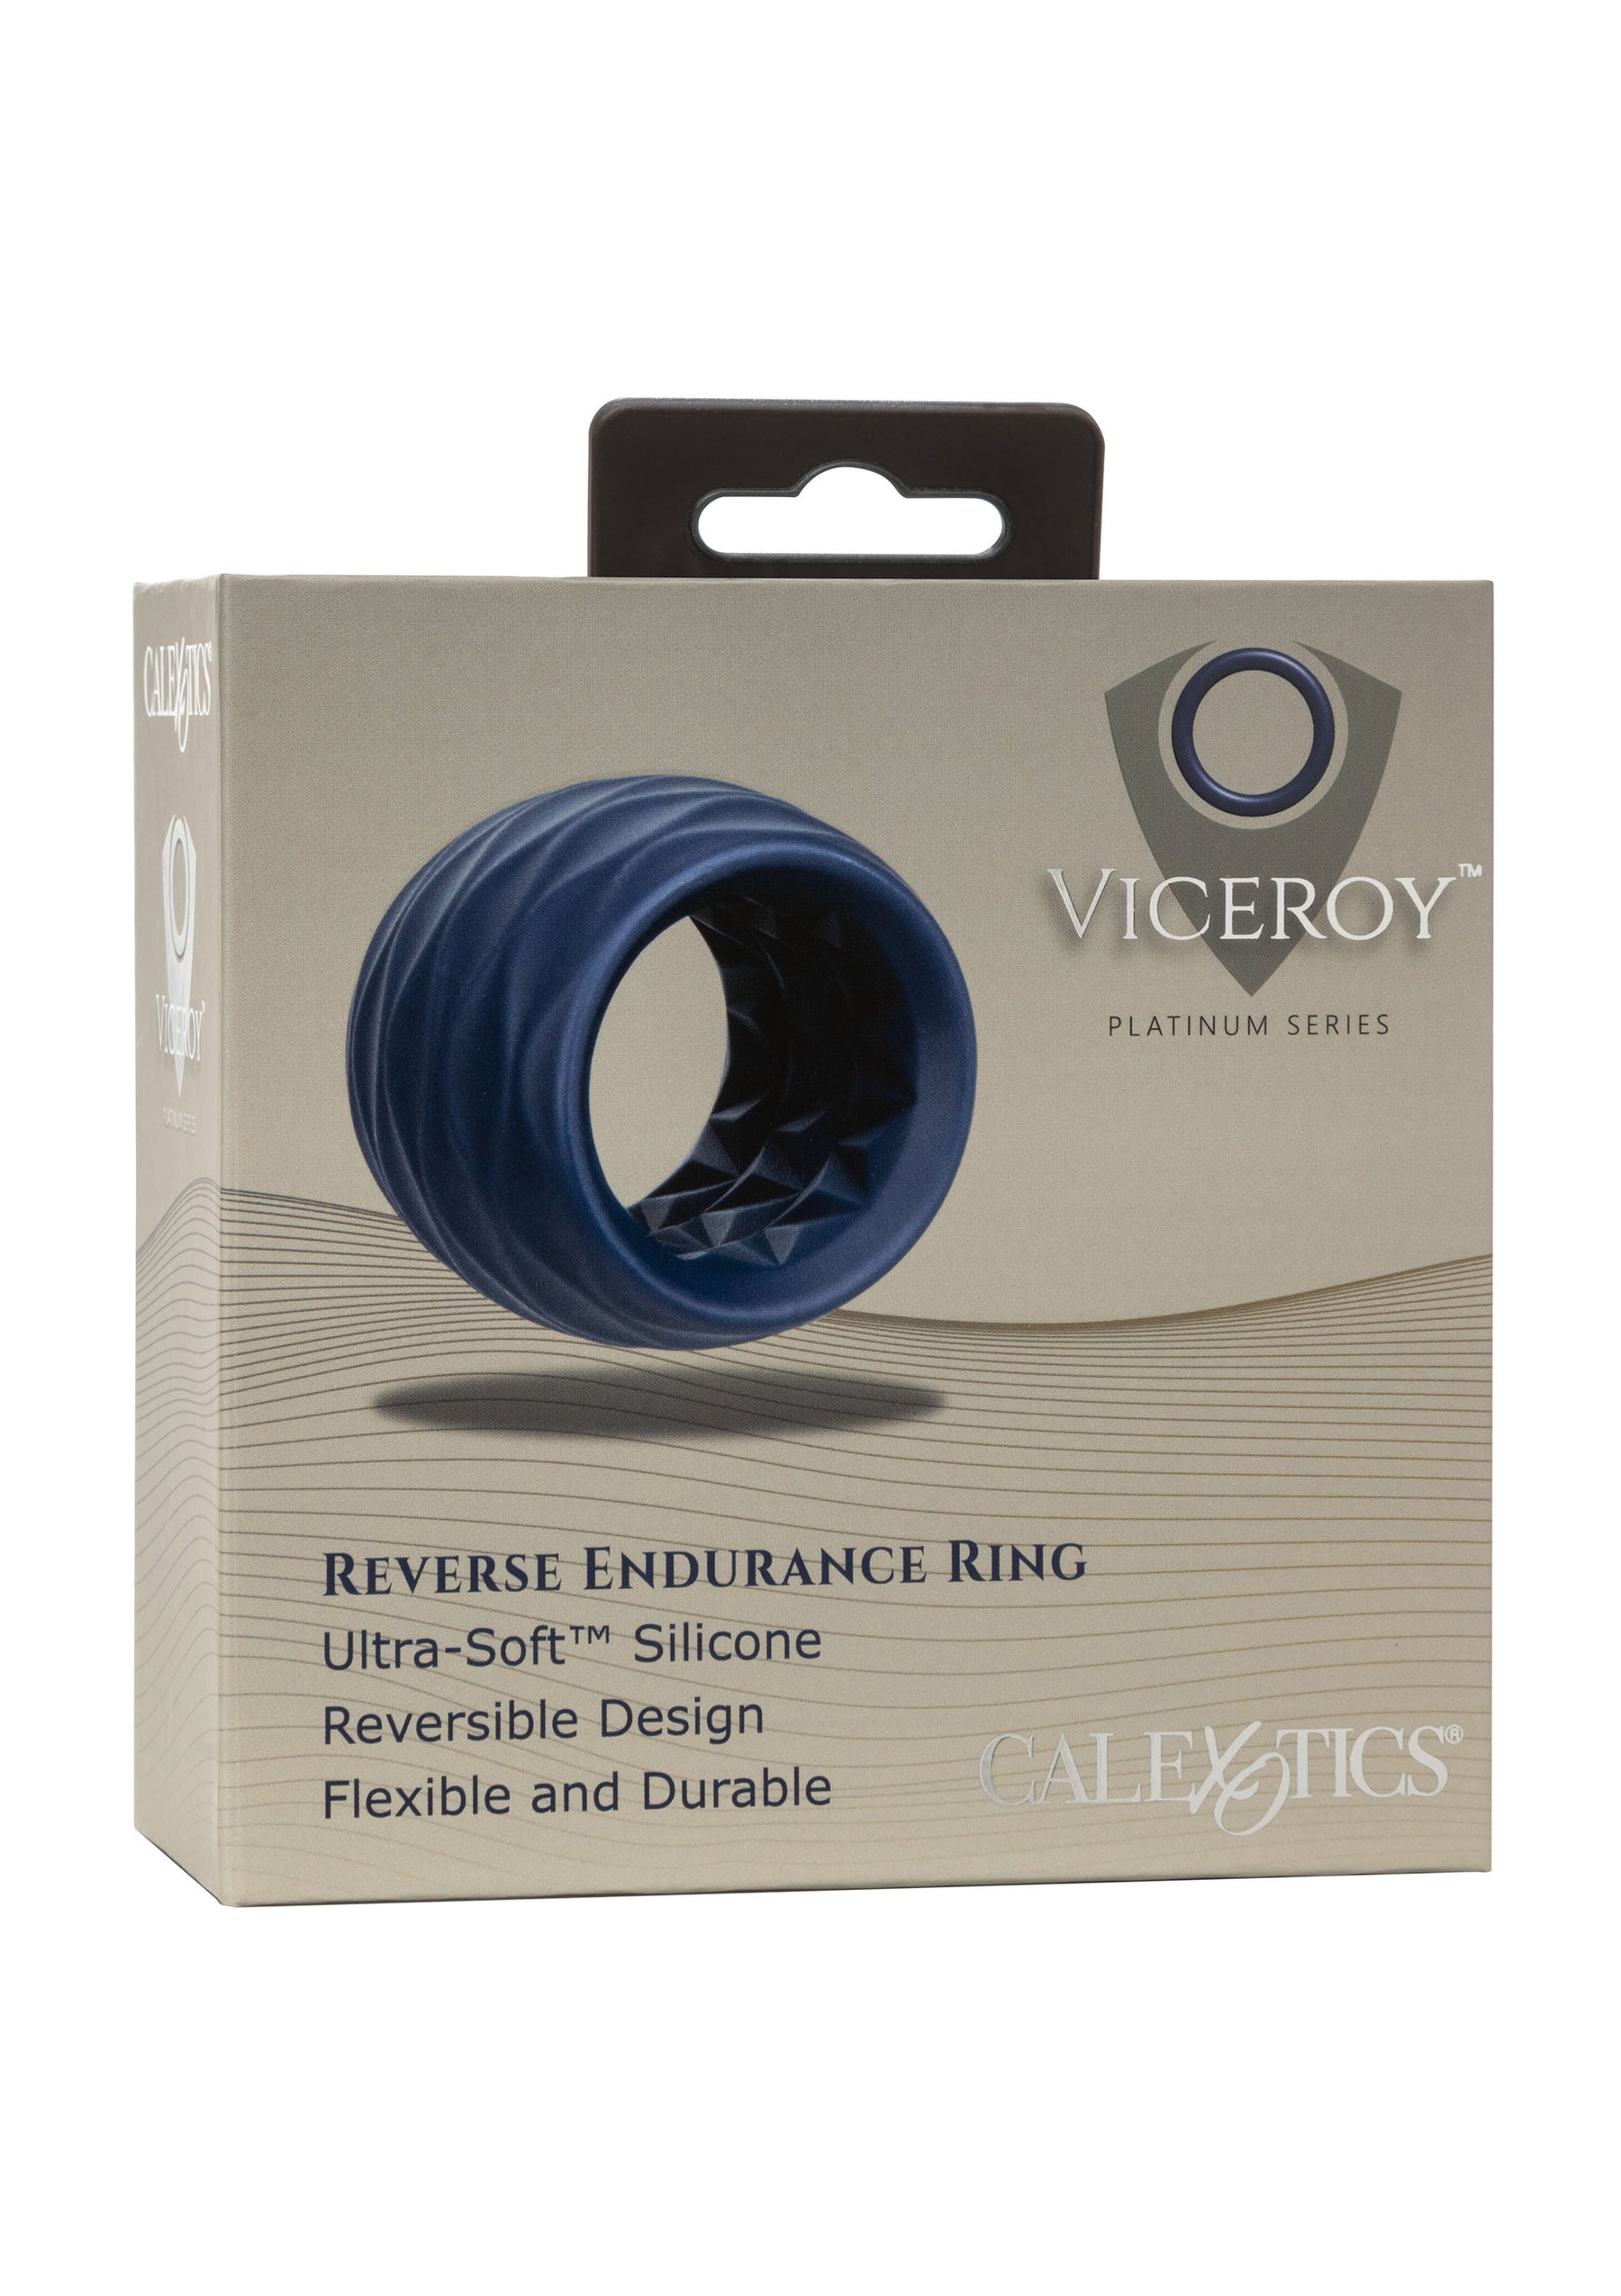 Viceroy Reverse Endurance Ring